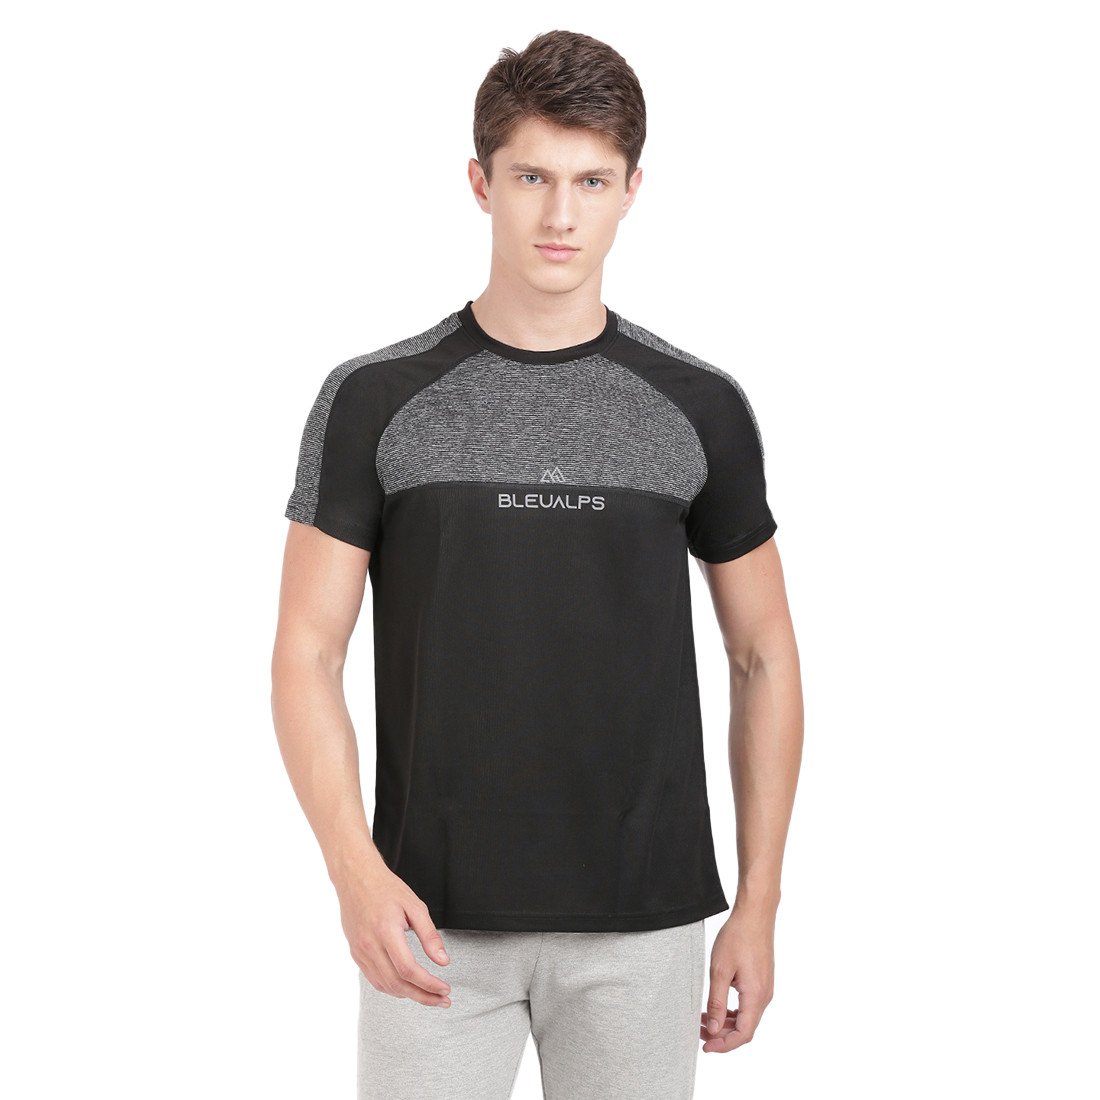 Bleualps Active Mens Round Neck T Shirt With Stripes N Cut Panels - Black Colour | Sports T-Shirt | Workout T-Shirt